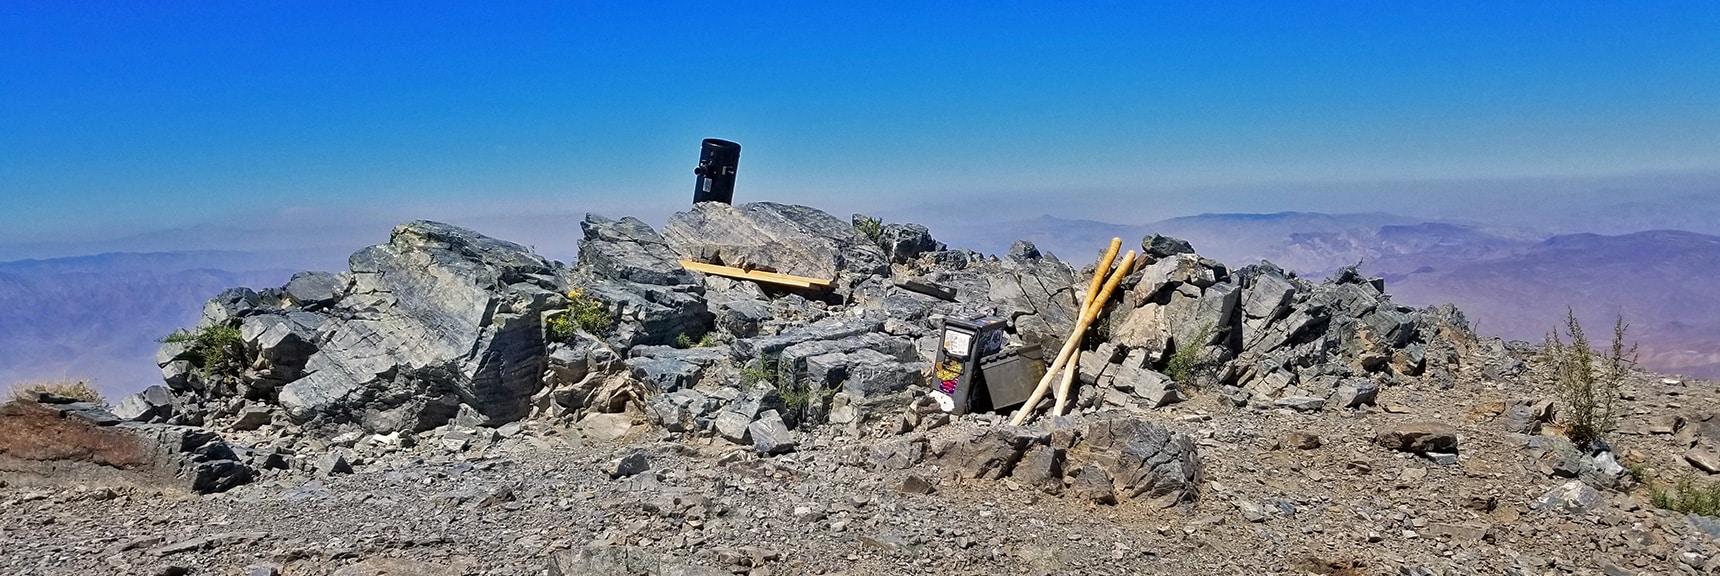 Arrival on Telescope Peak True Summit. Black Telescope on Summit Rocks | Telescope Peak Summit from Wildrose Charcoal Kilns Parking Area, Panamint Mountains, Death Valley National Park, California